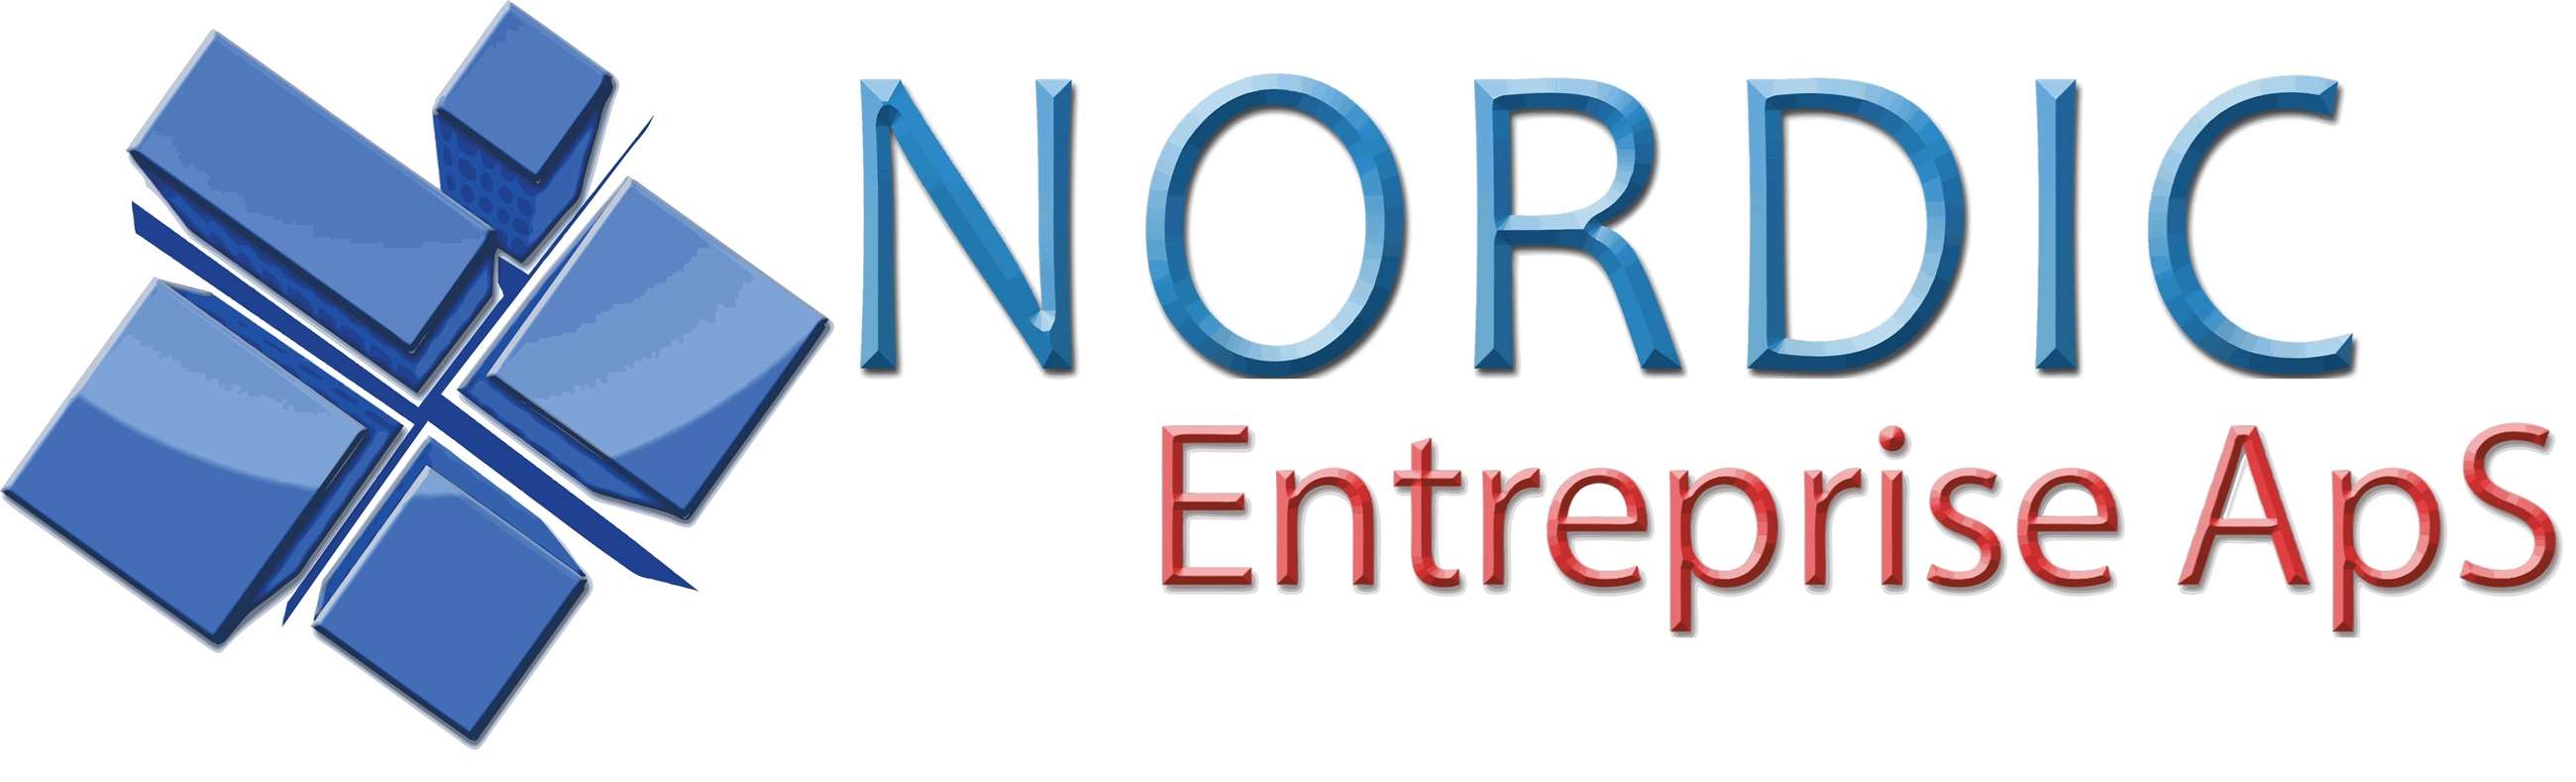 nordic entreprise logo